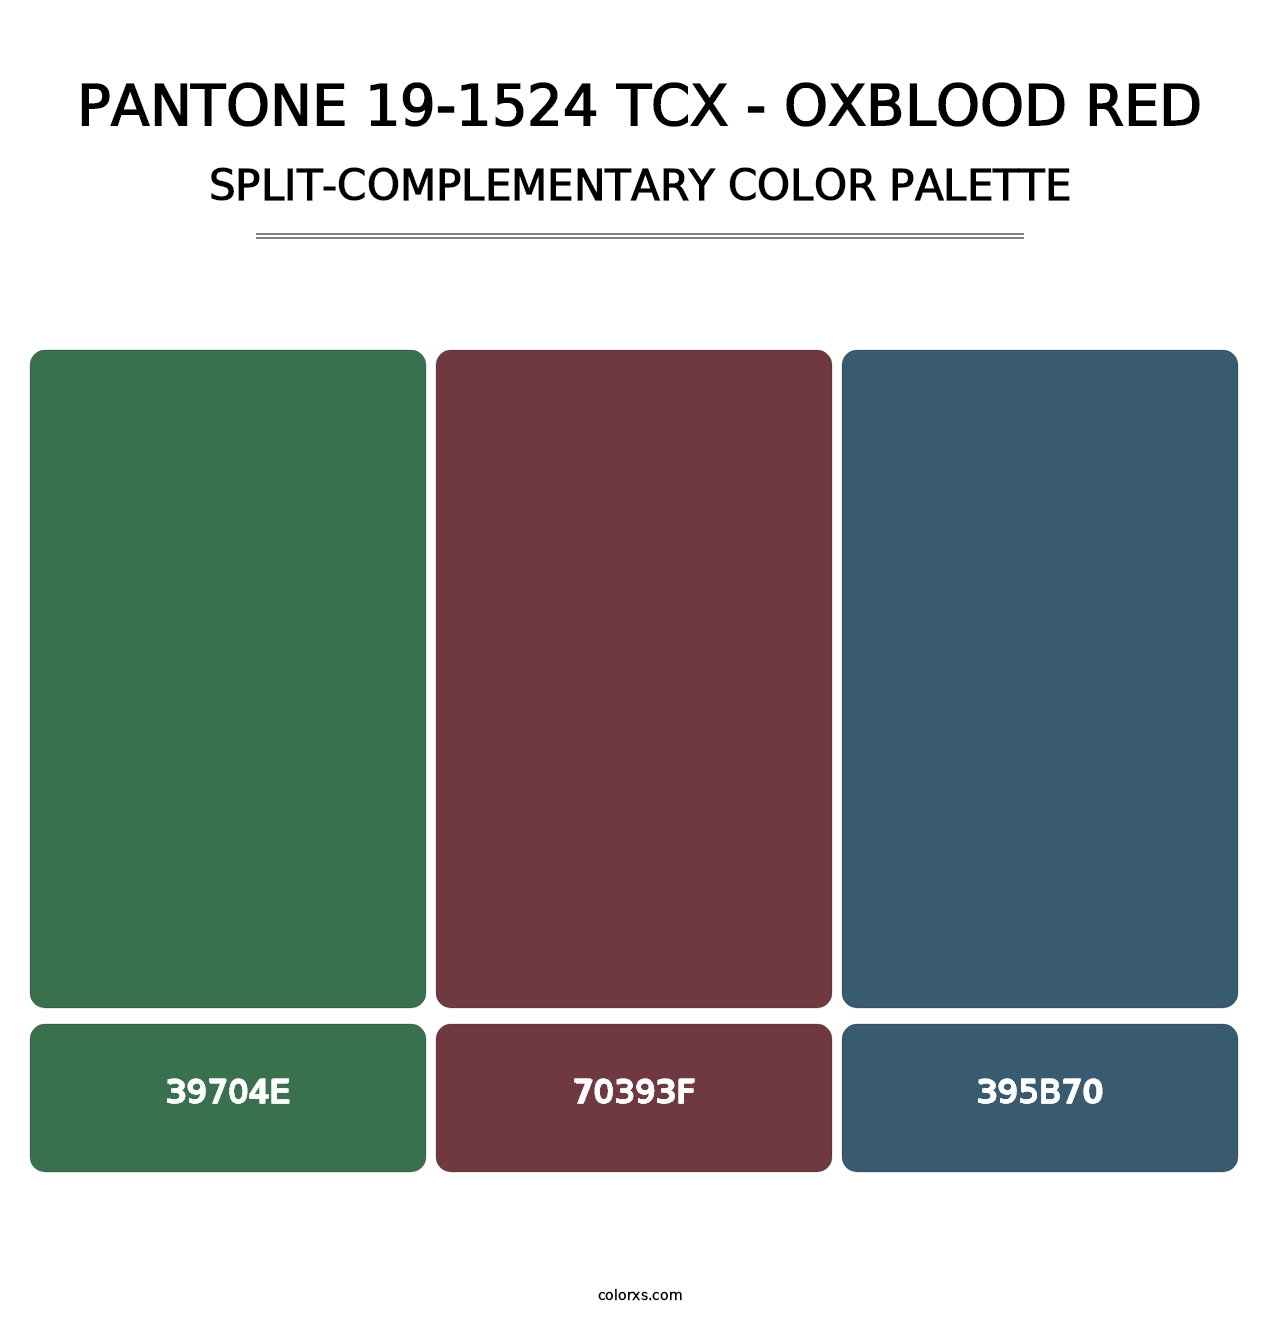 PANTONE 19-1524 TCX - Oxblood Red - Split-Complementary Color Palette